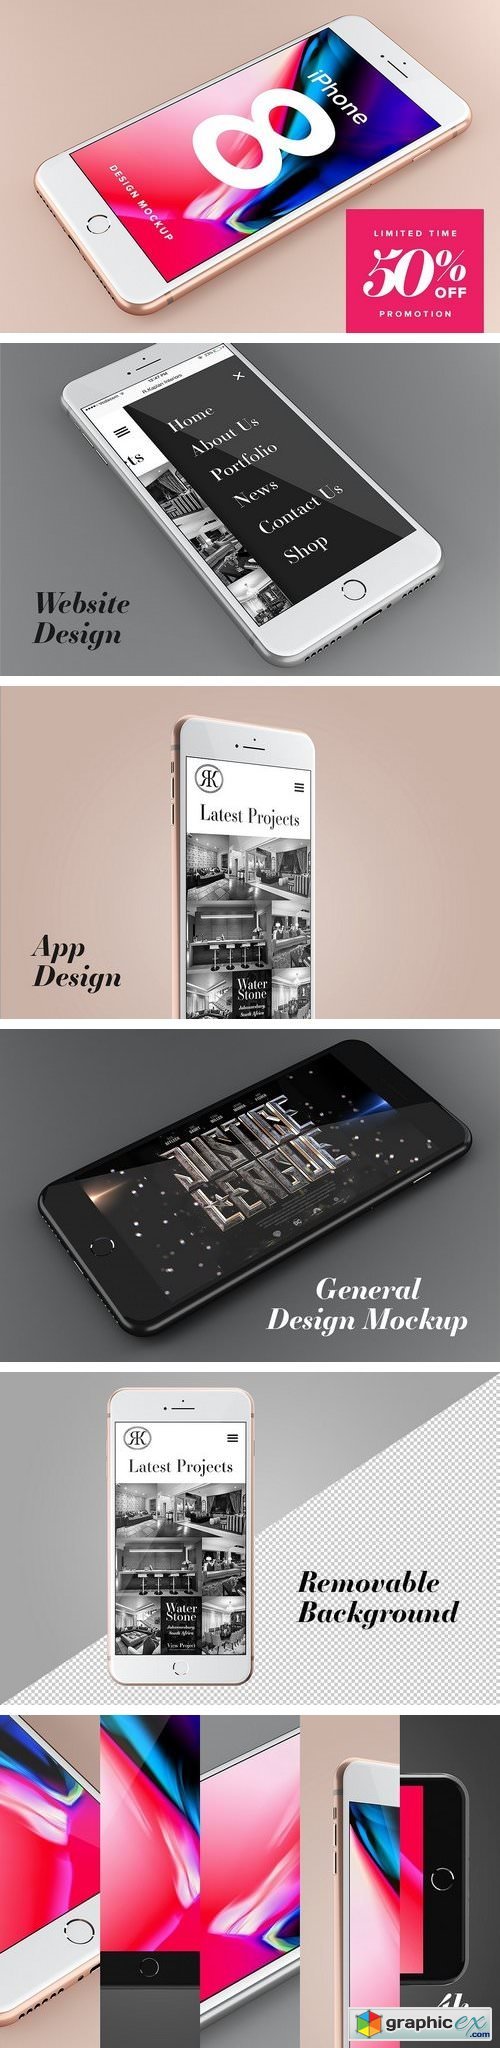 iPhone 8 Design Mockup